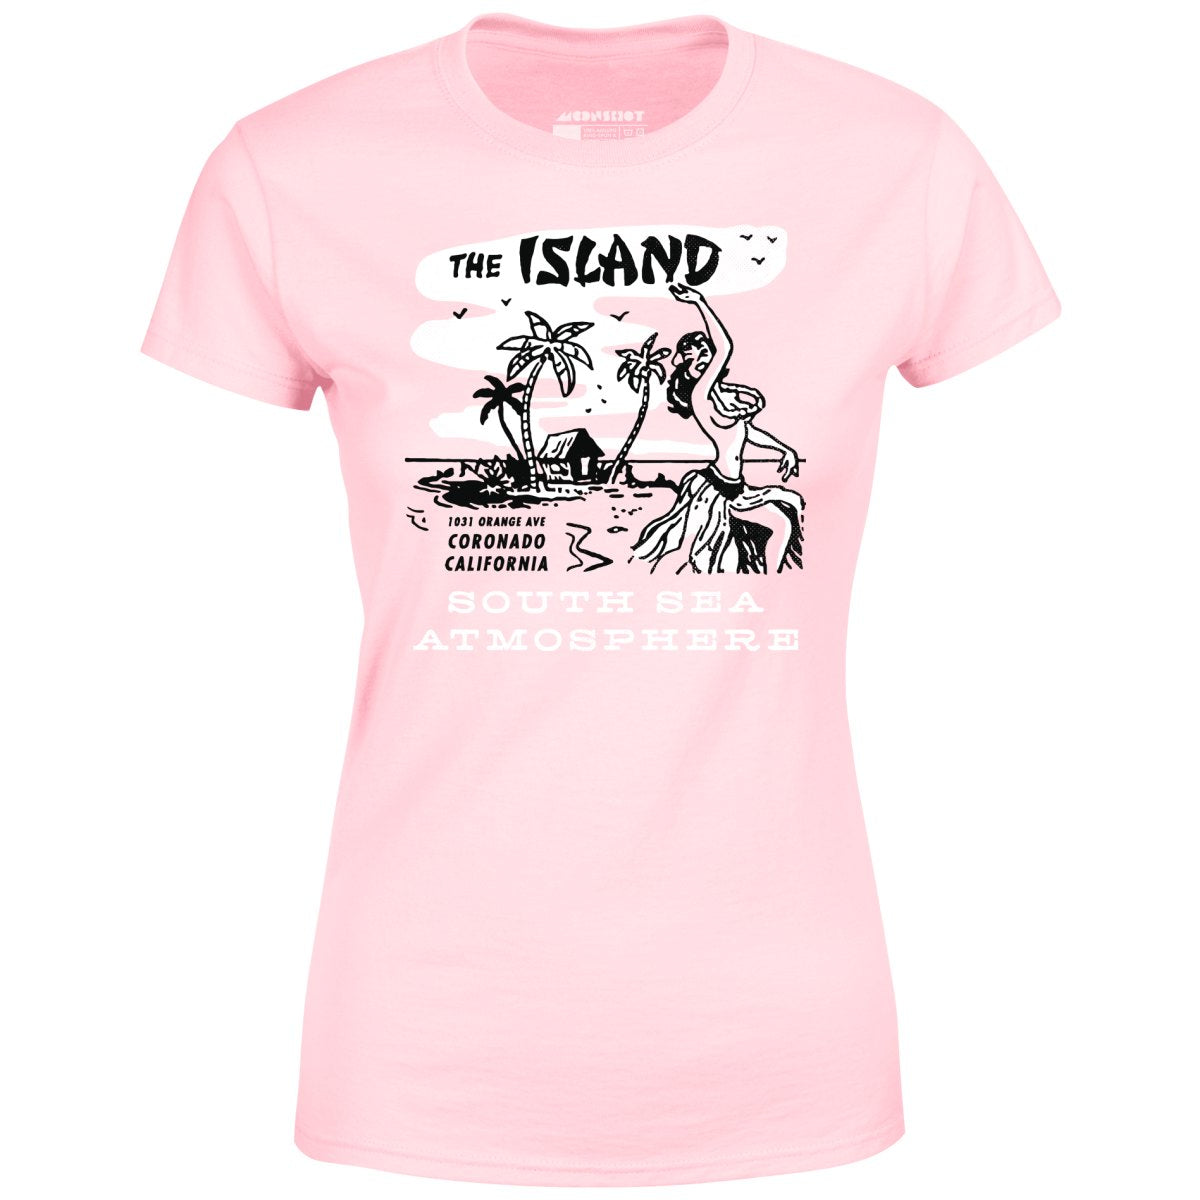 The Island Cafe v2 - Coronado, CA - Vintage Tiki Bar - Women's T-Shirt